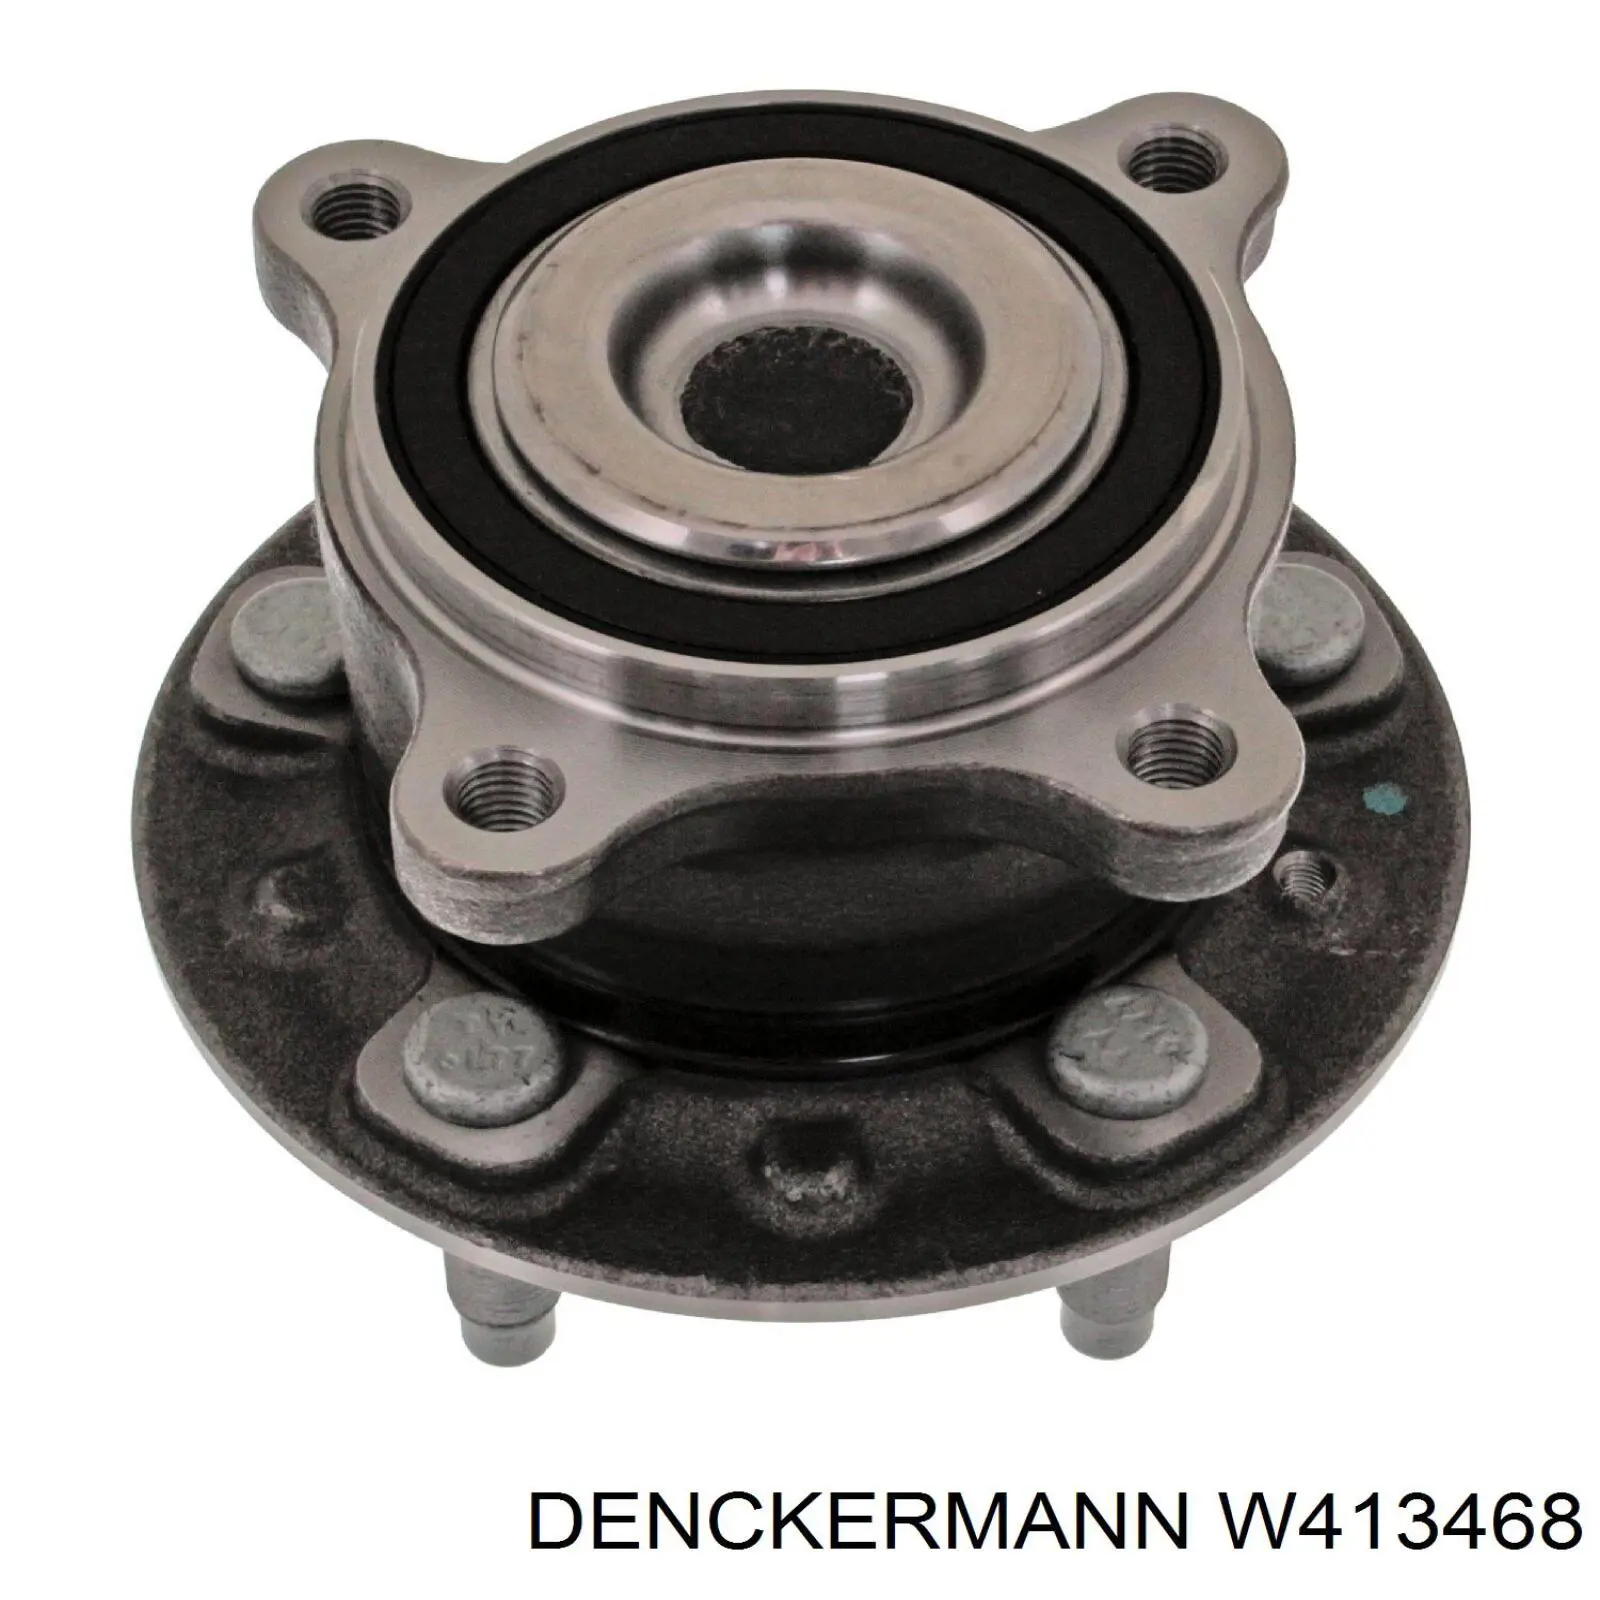 W413468 Denckermann ступица задняя